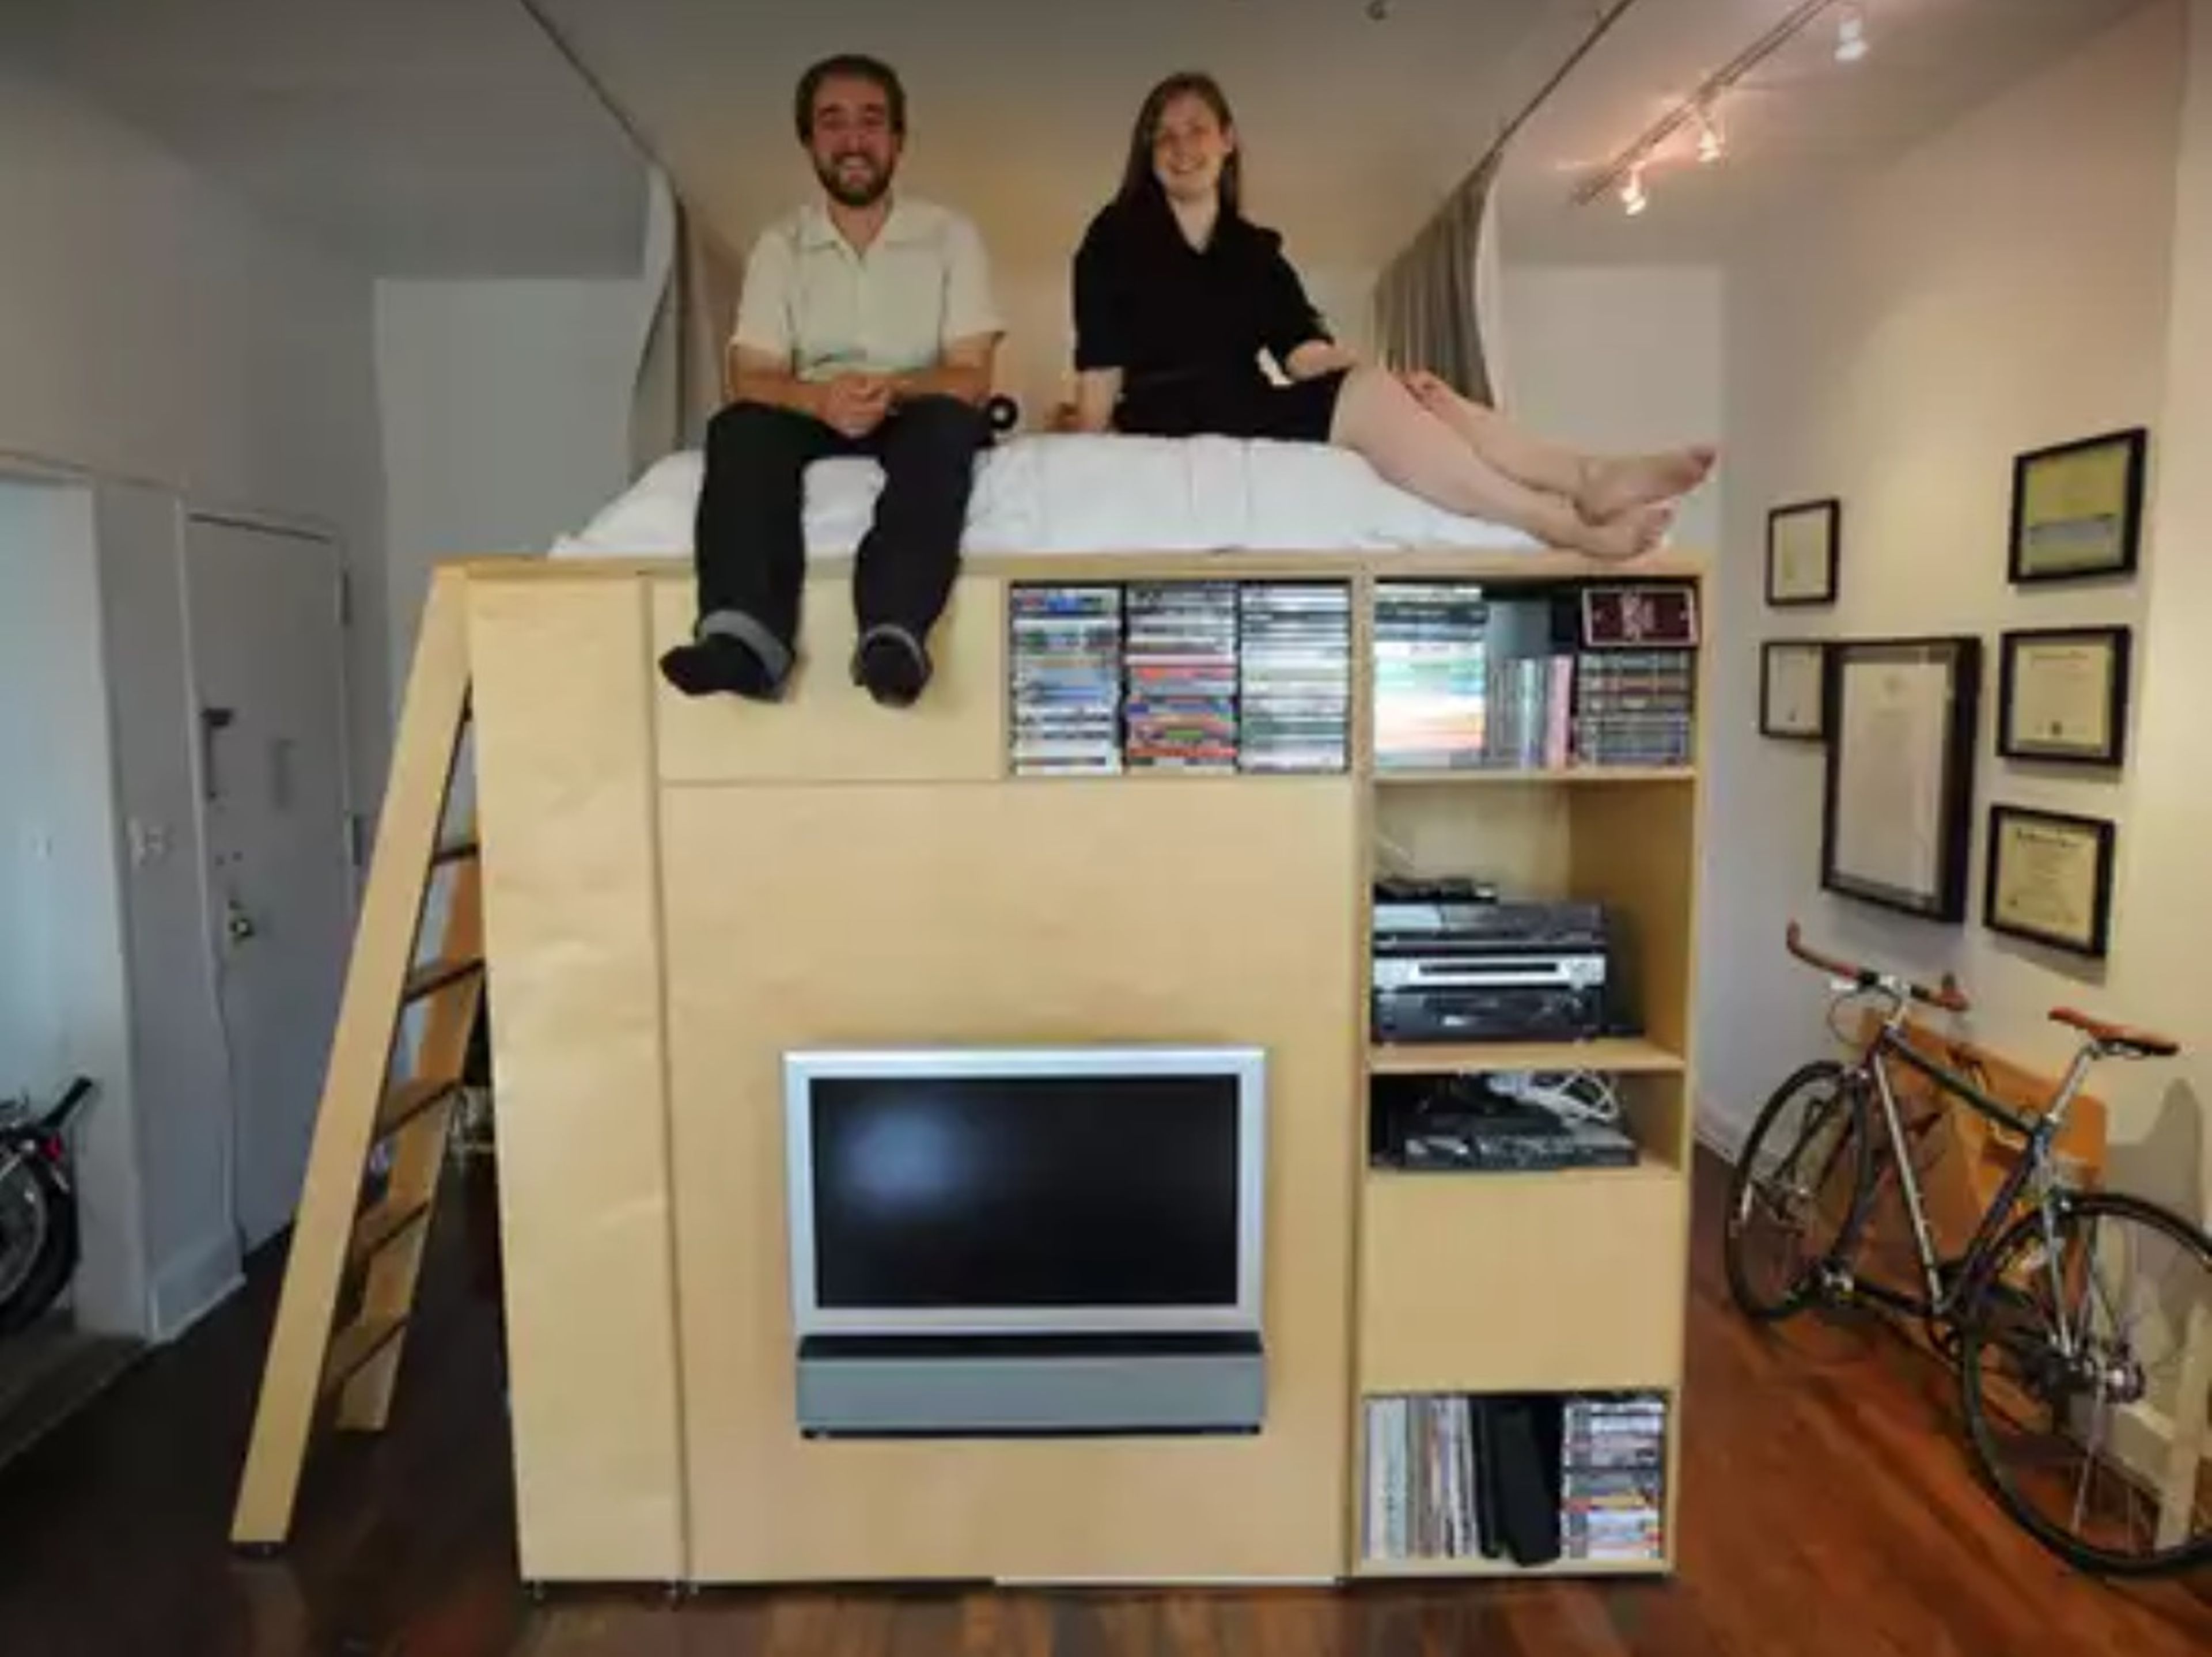 Hillary Padget y Anthony Harrington en su apartamento tipo loft en Fort Greene, Brooklyn.